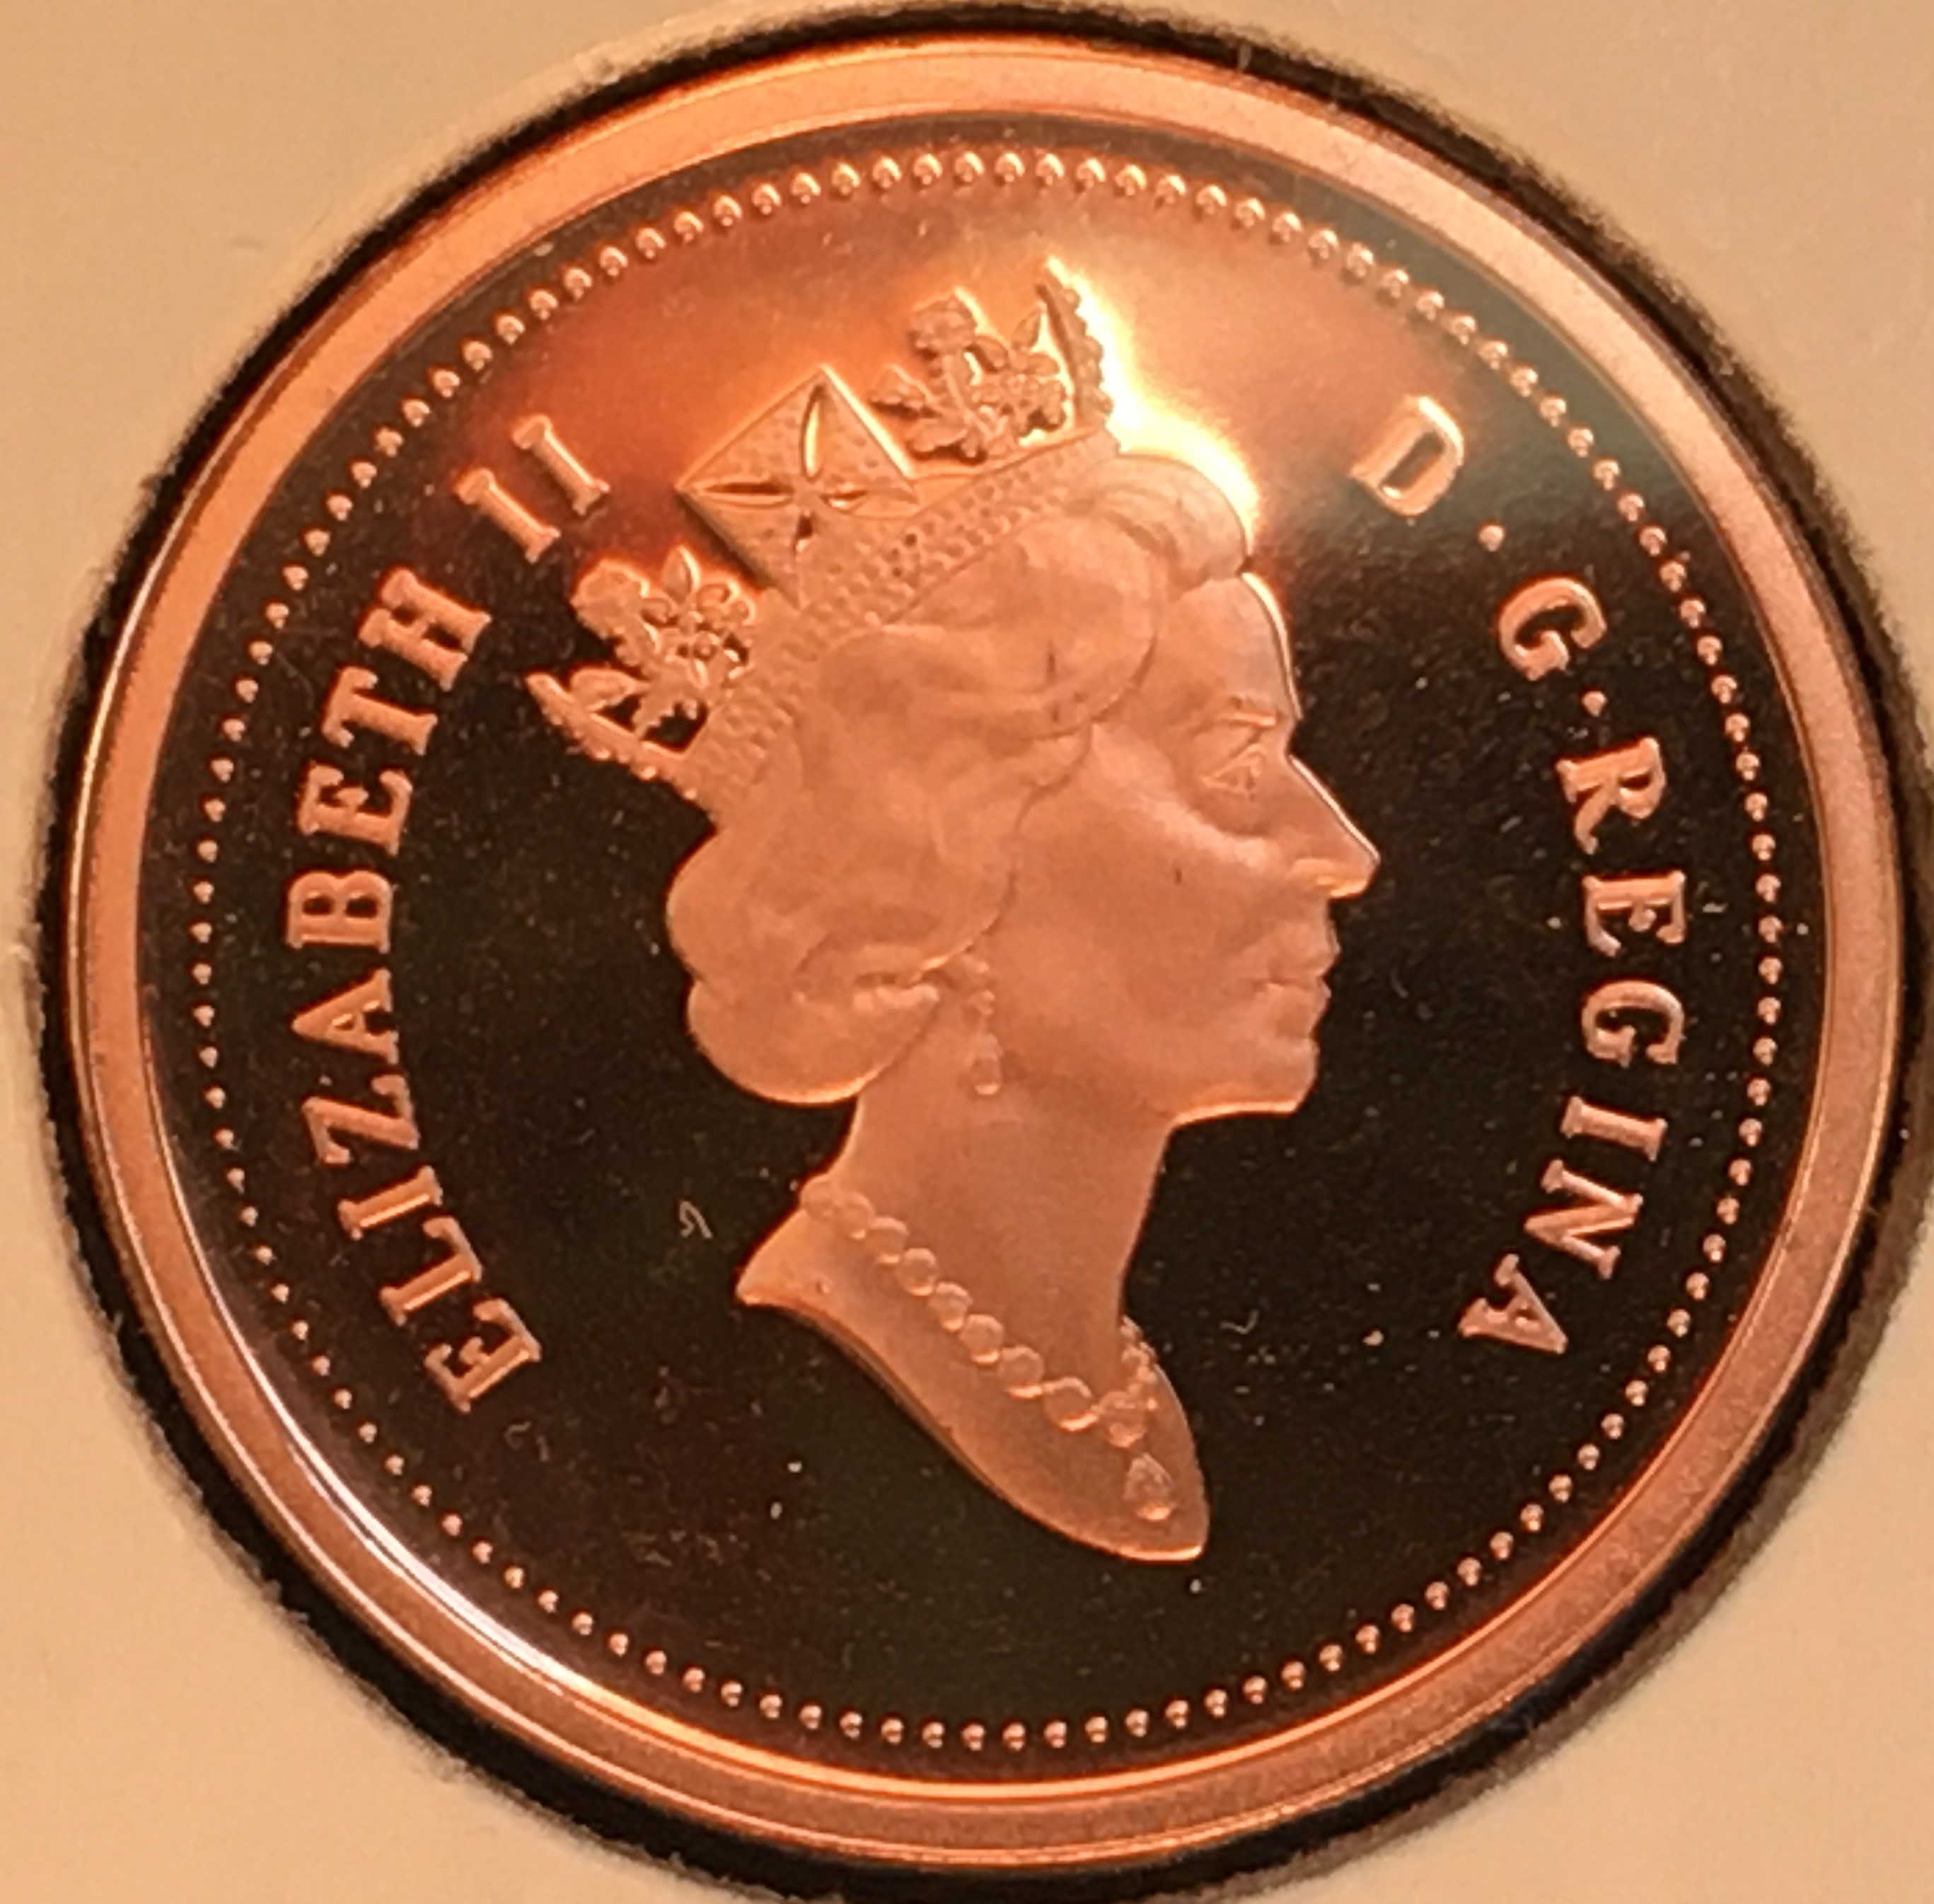 1 cent 2003 plaquée or.jpg